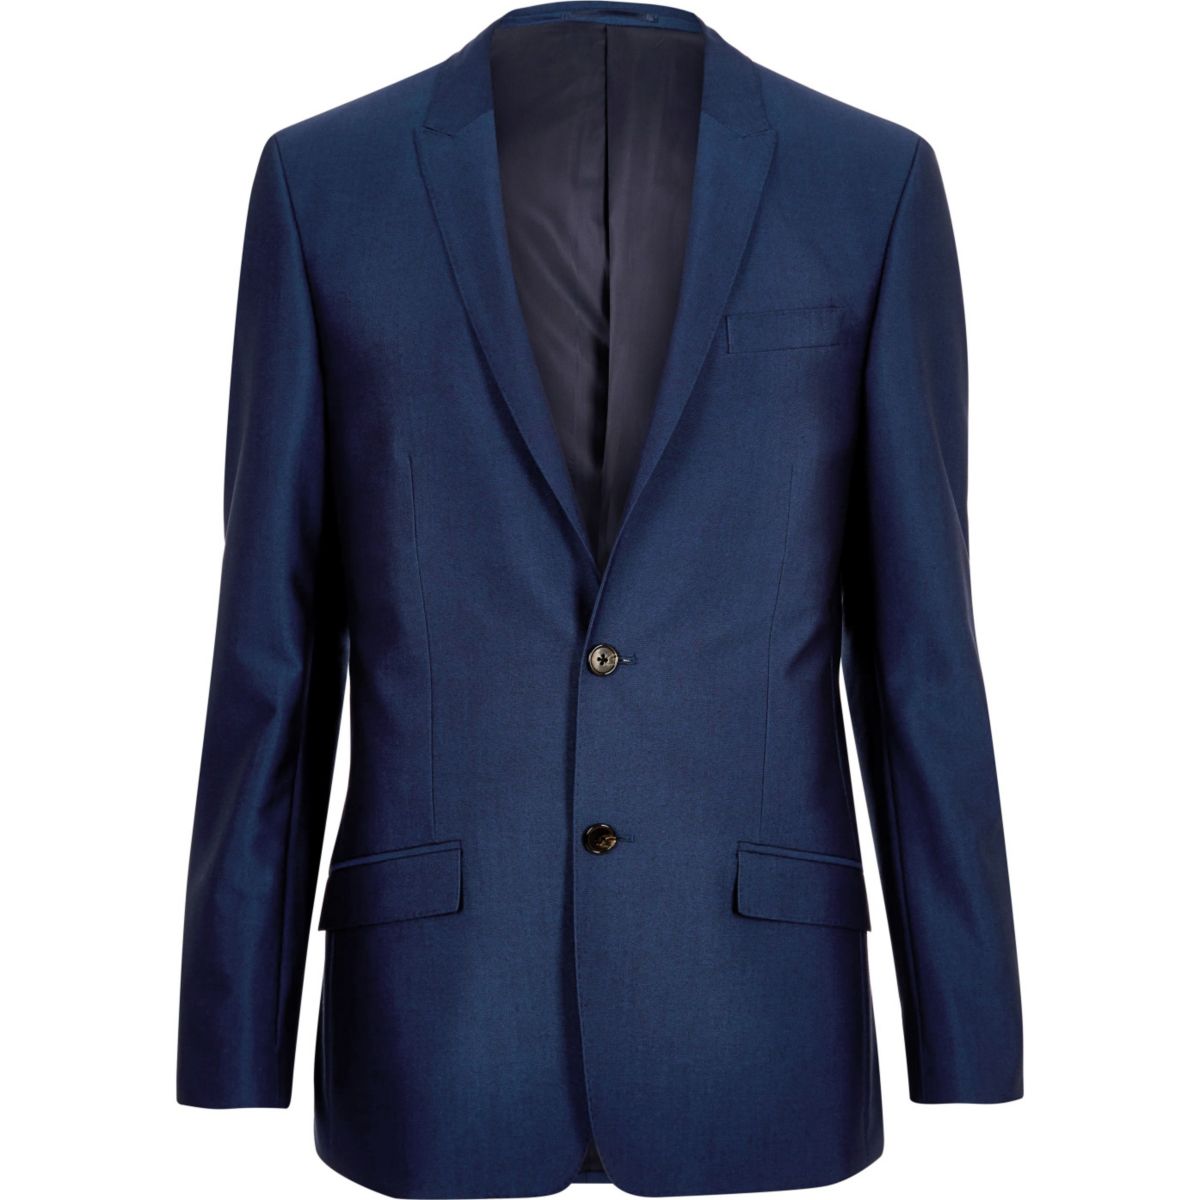 Bright blue skinny suit jacket - Seasonal Offers - Sale - men